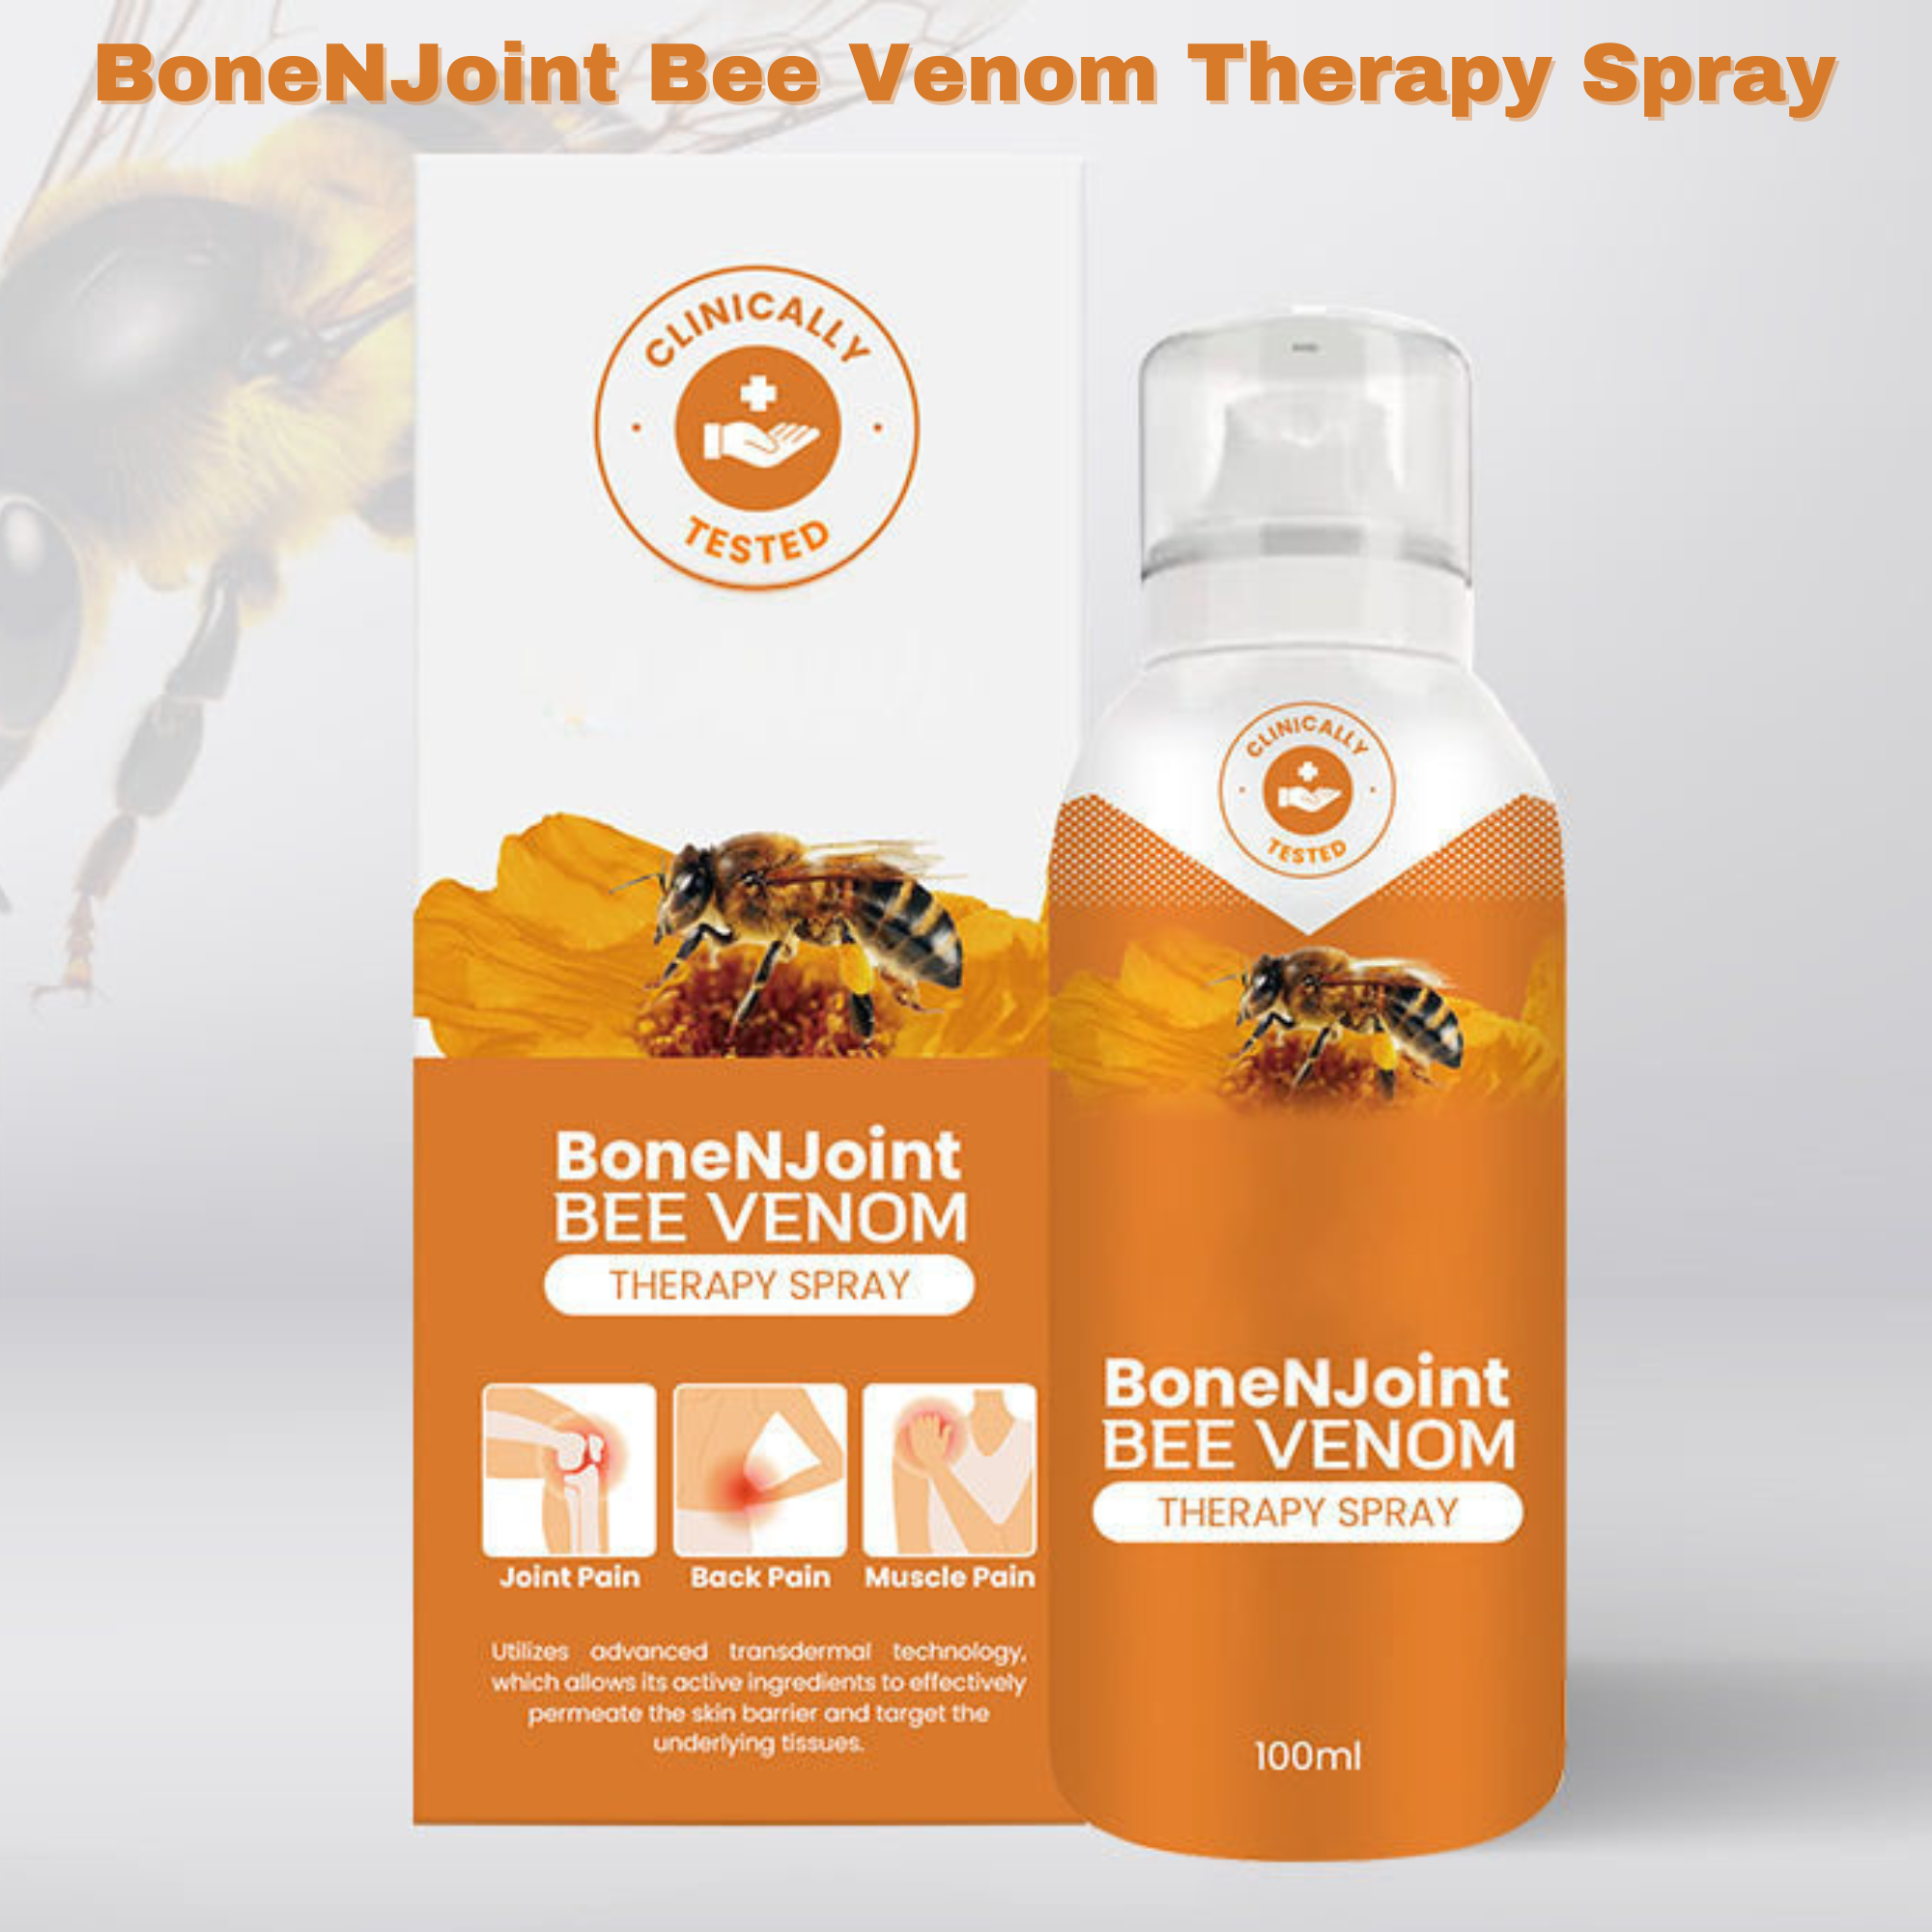 BoneNJoint Bee Venom Therapy Spray